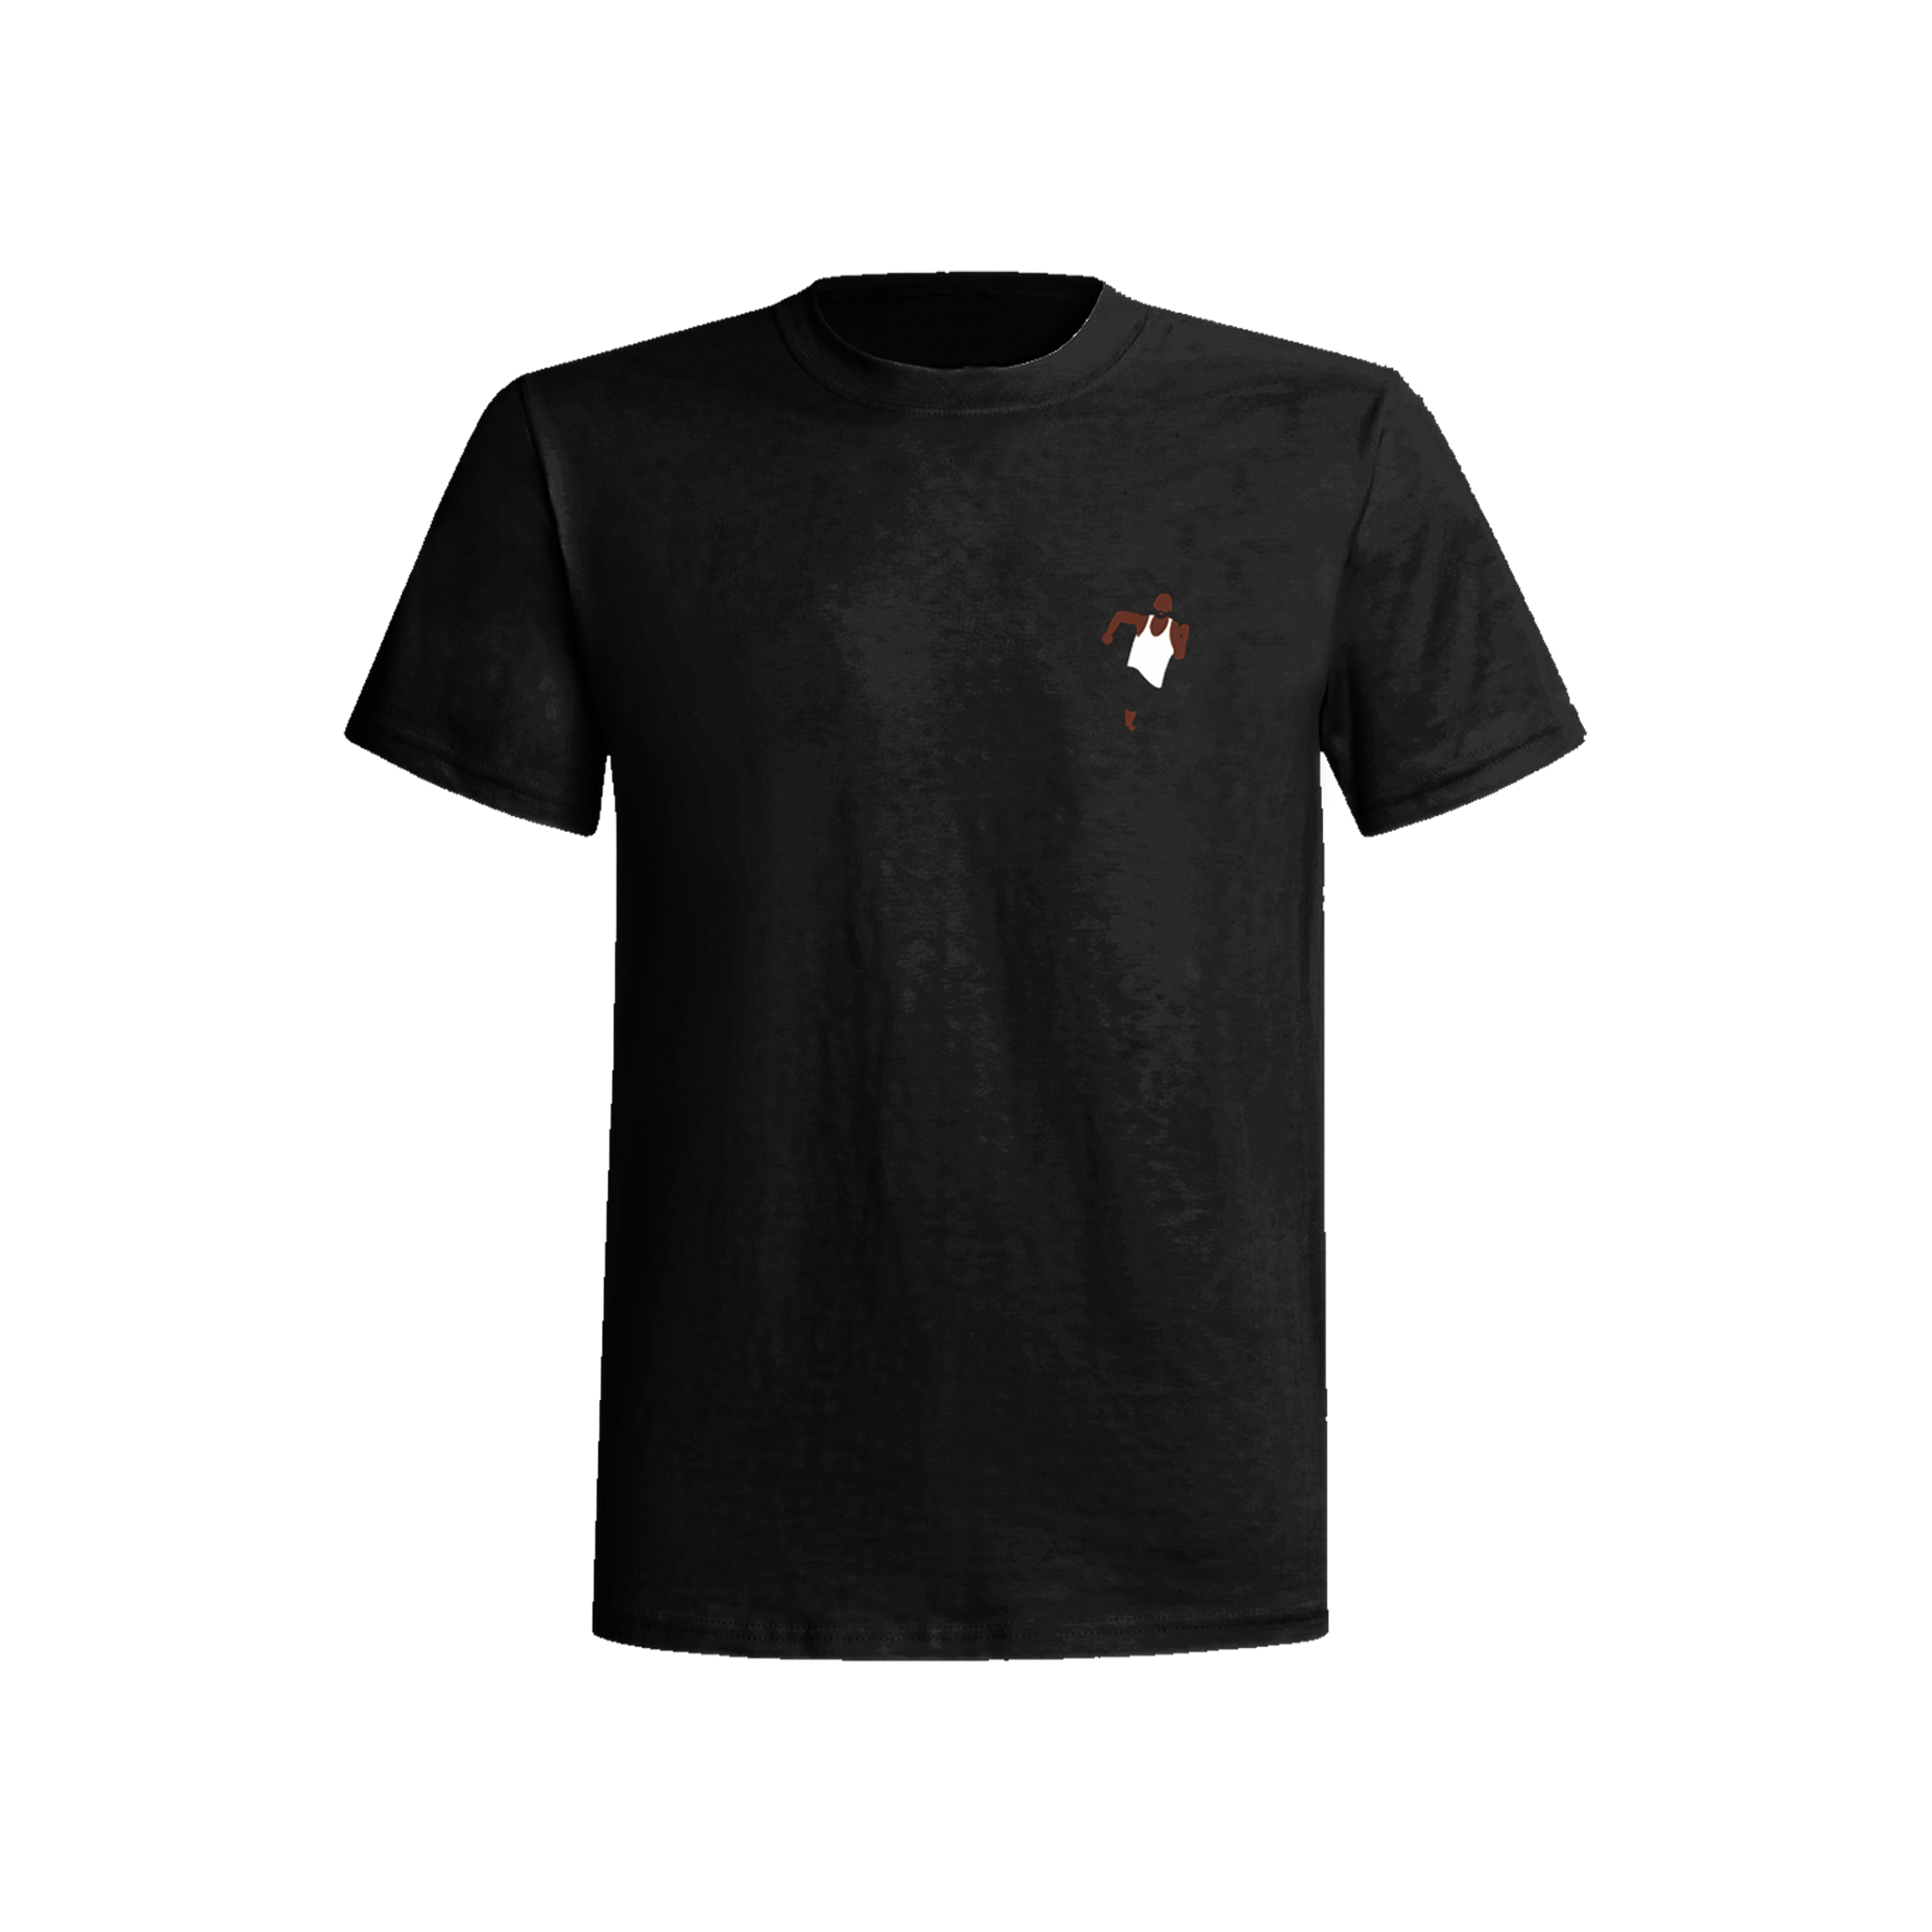 Joe Budden Drake Feud Merch, Black T-Shirt